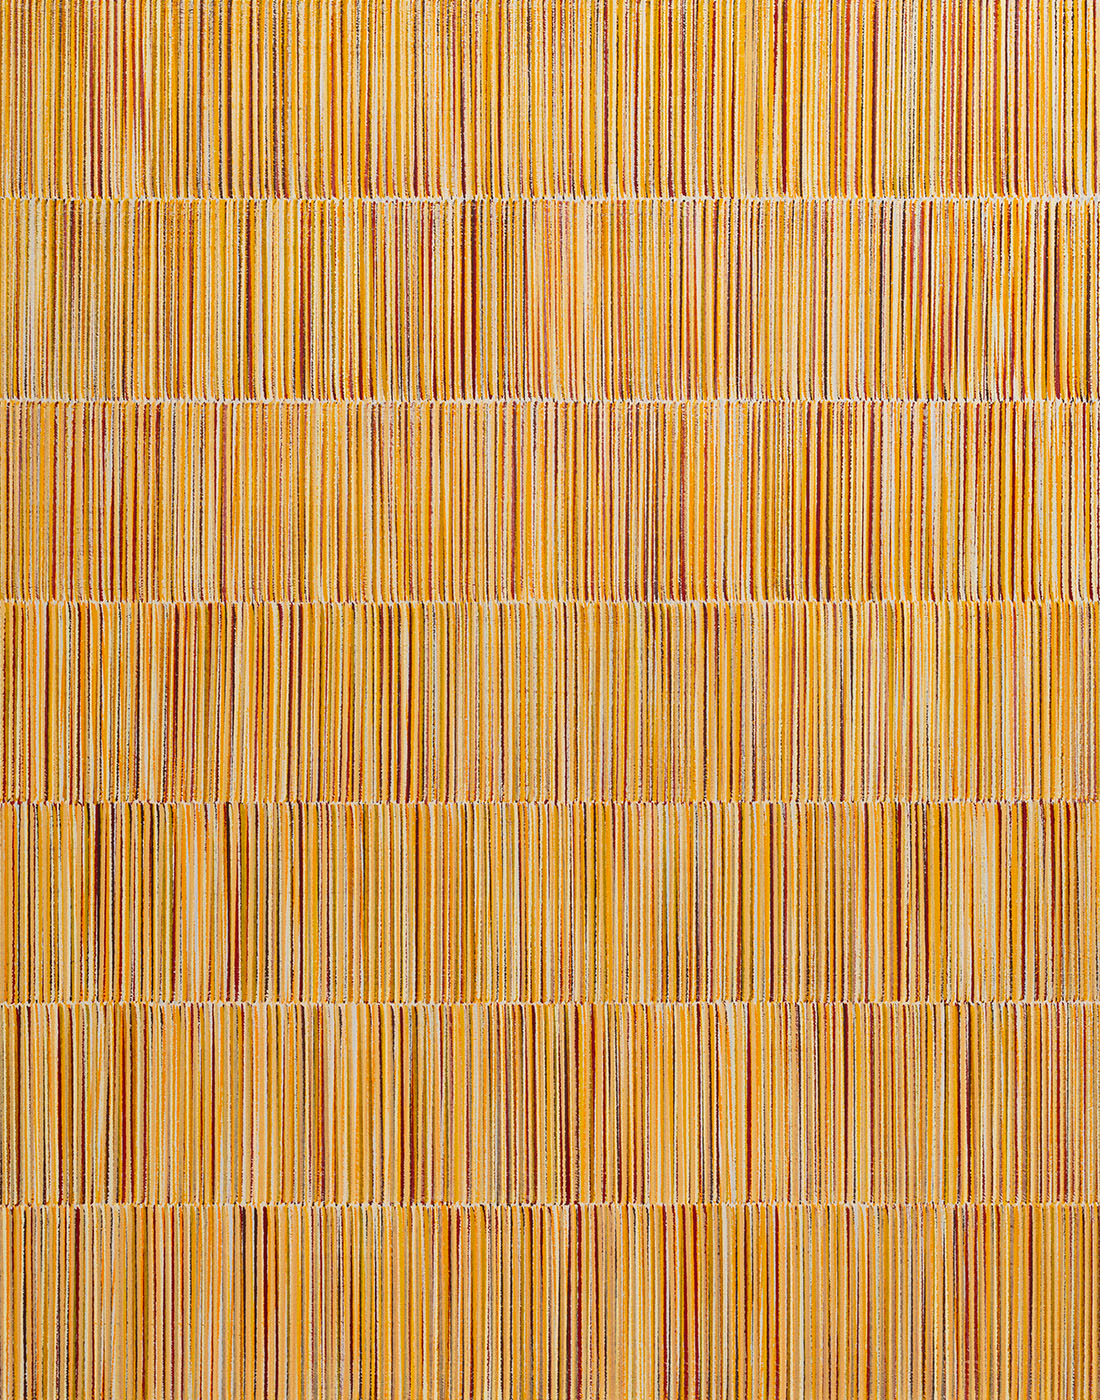 Nikola Dimitrov, FarbKlang I, 2019, Pigmente, Bindemittel auf Leinwand, 140 × 110 cm